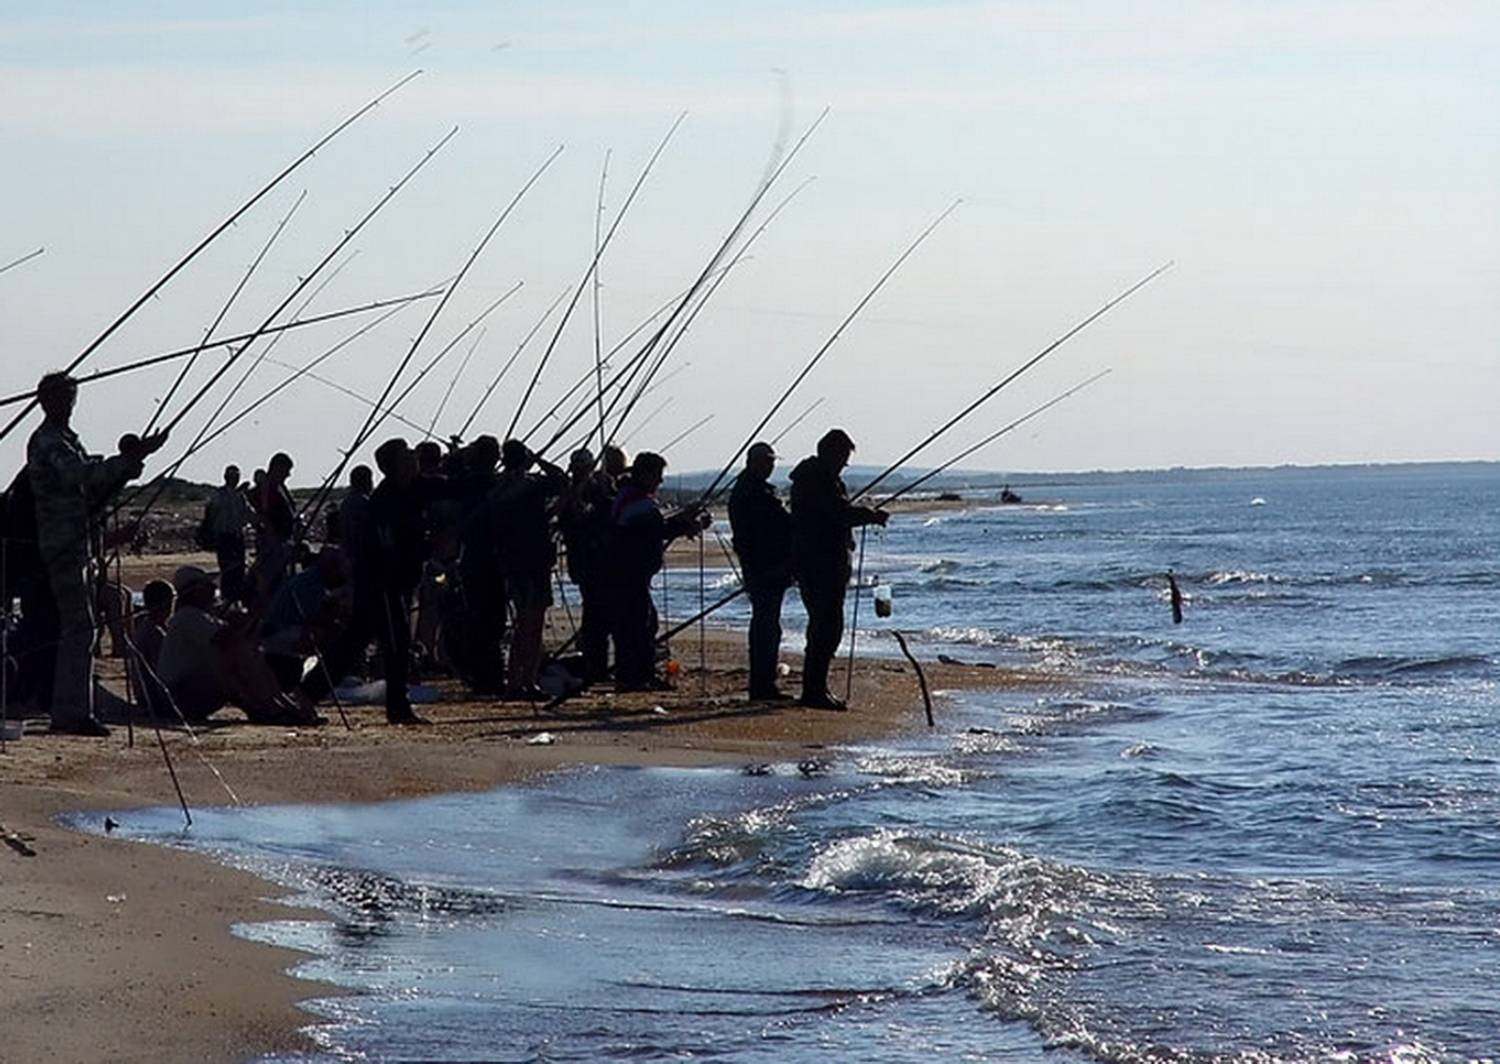 Какую рыбу ловили рыбаки